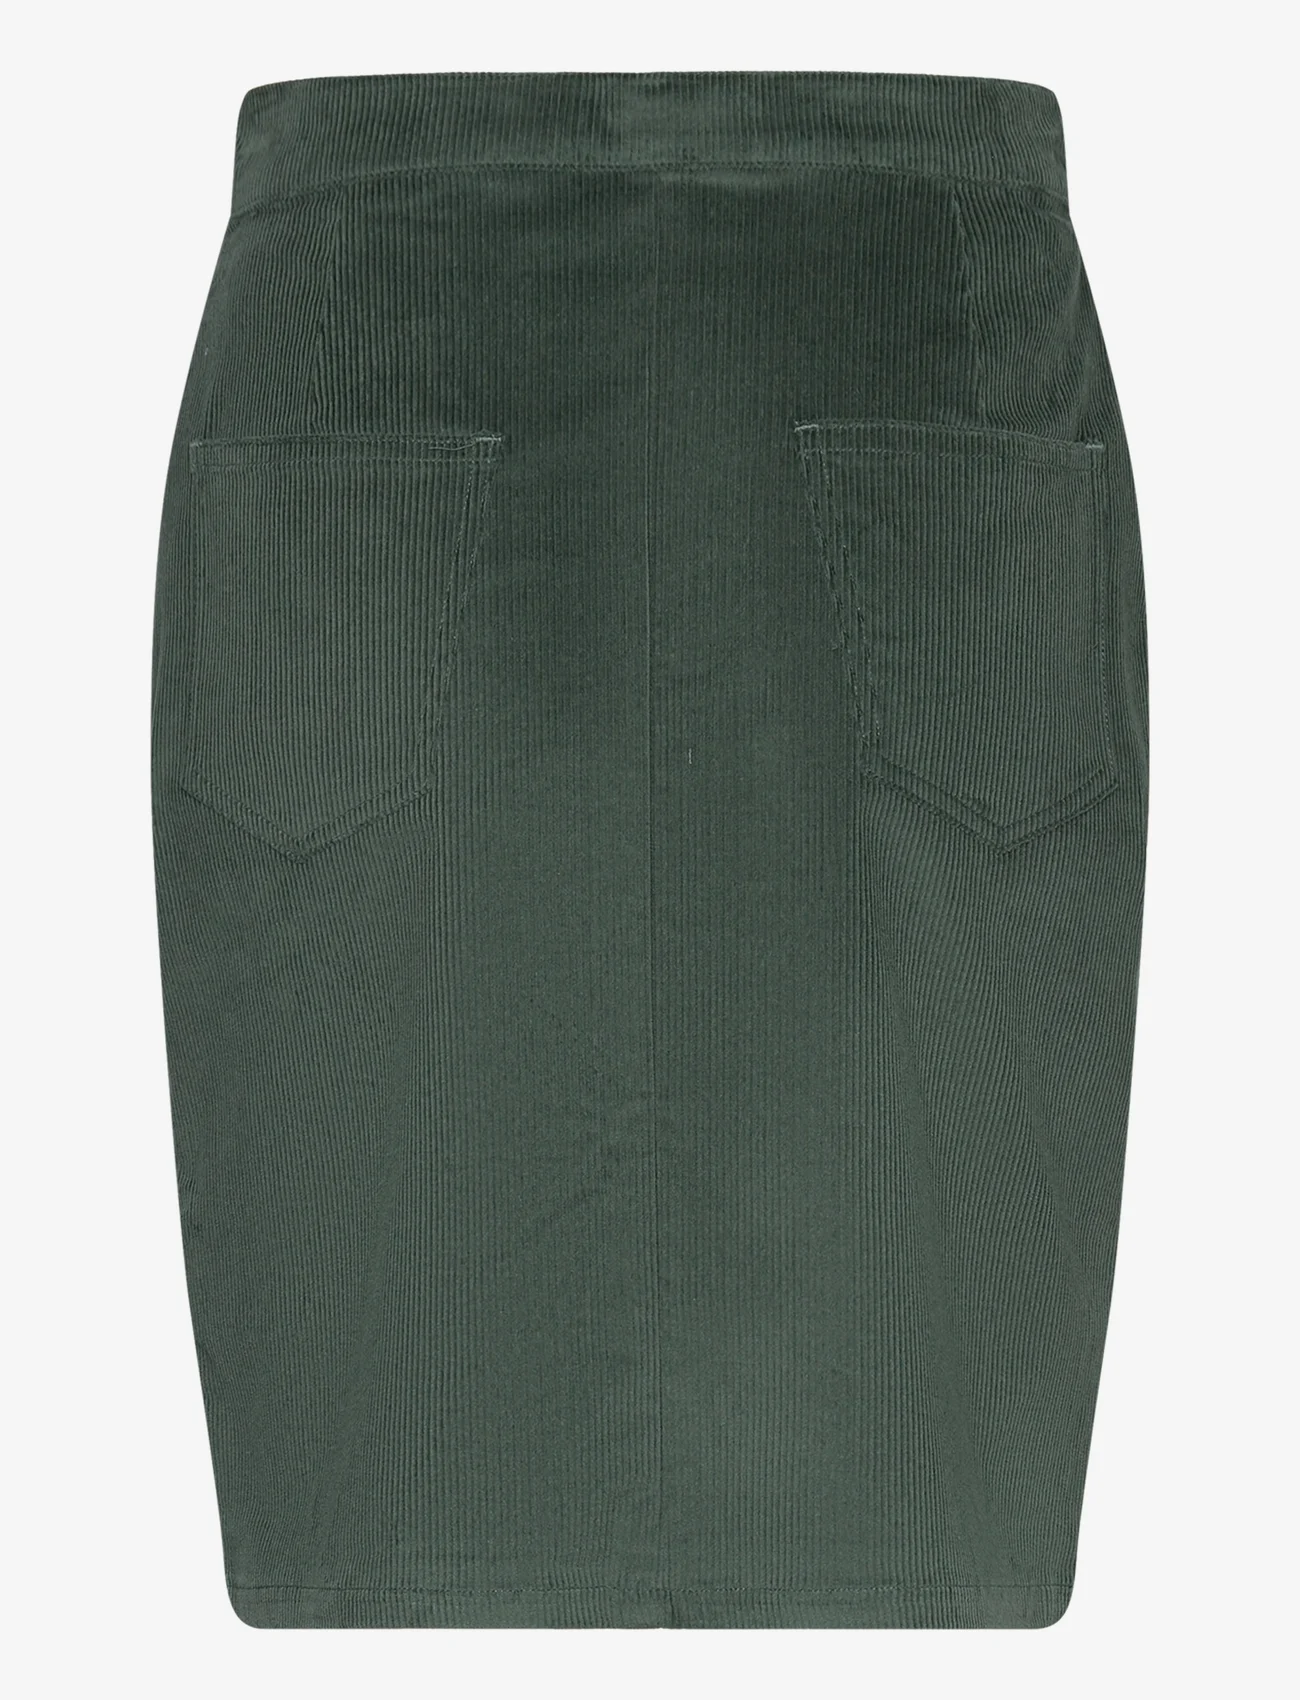 Tamaris Apparel - BASEL corduroy skirt - korte nederdele - garden topiary - 1